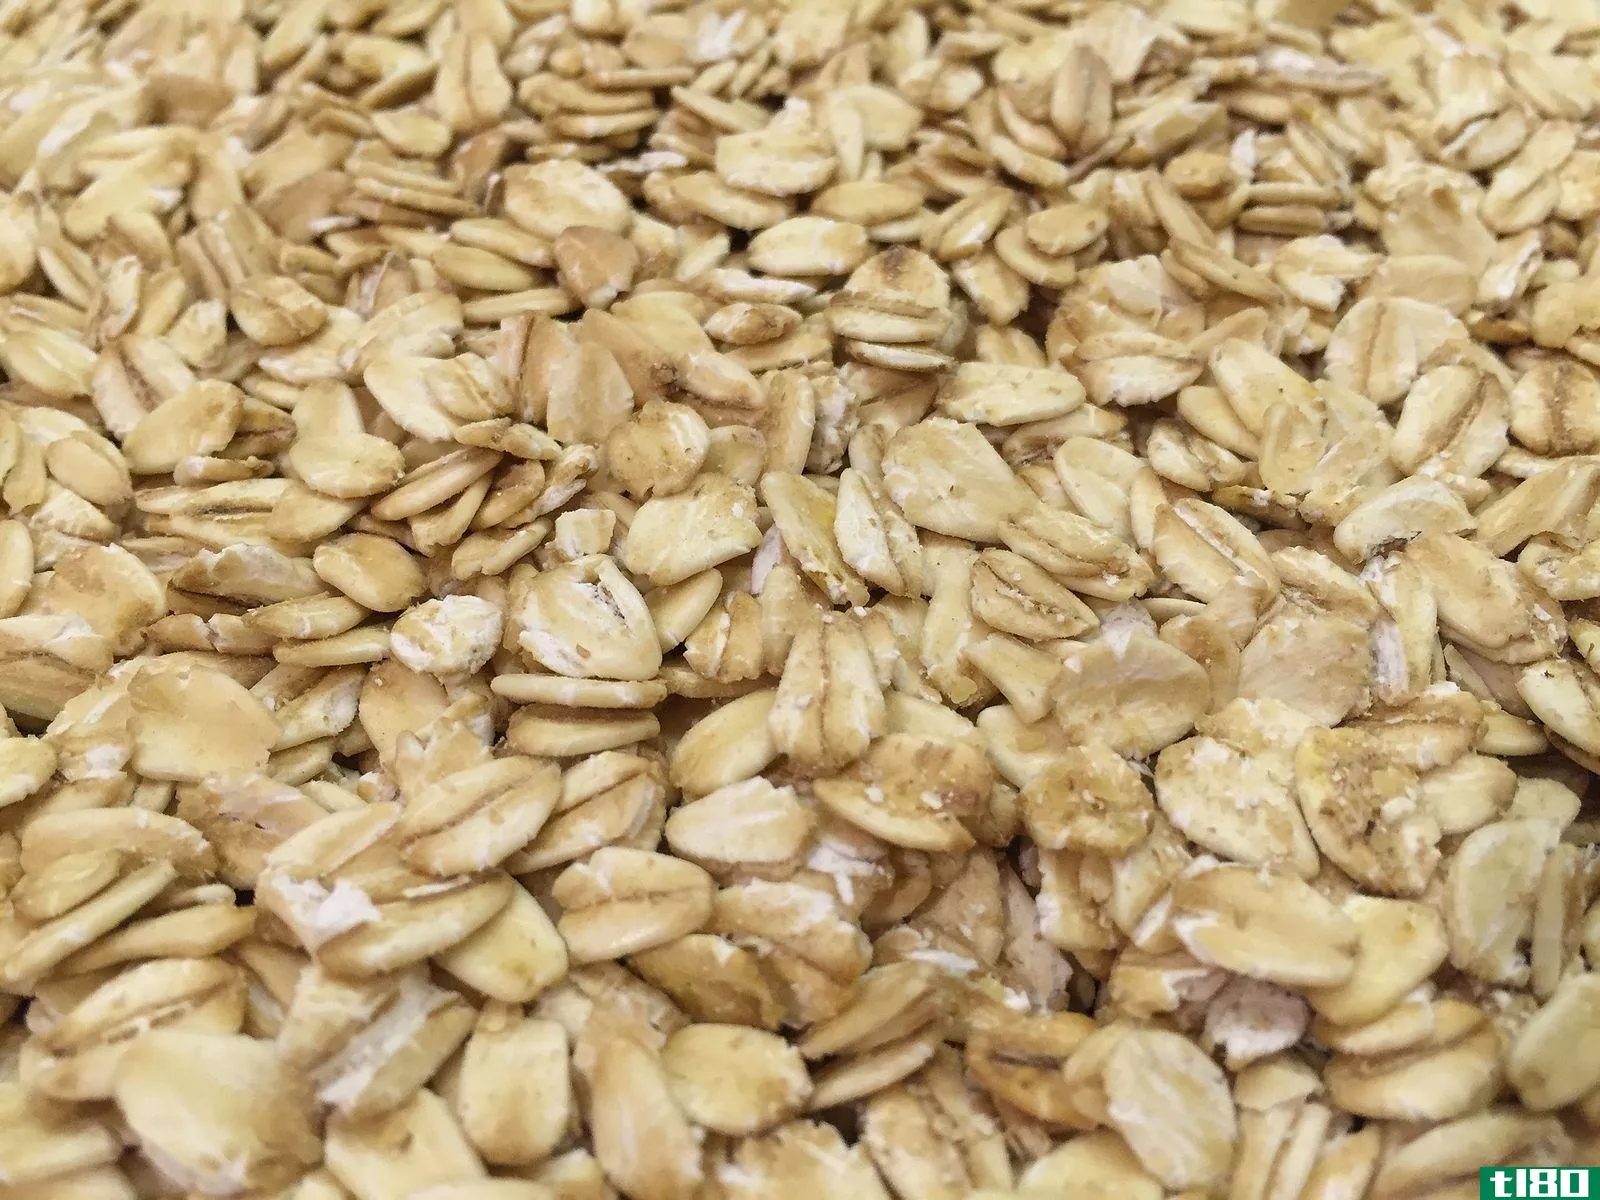 钢切燕麦(steel cut oats)和燕麦卷(rolled oats)的区别